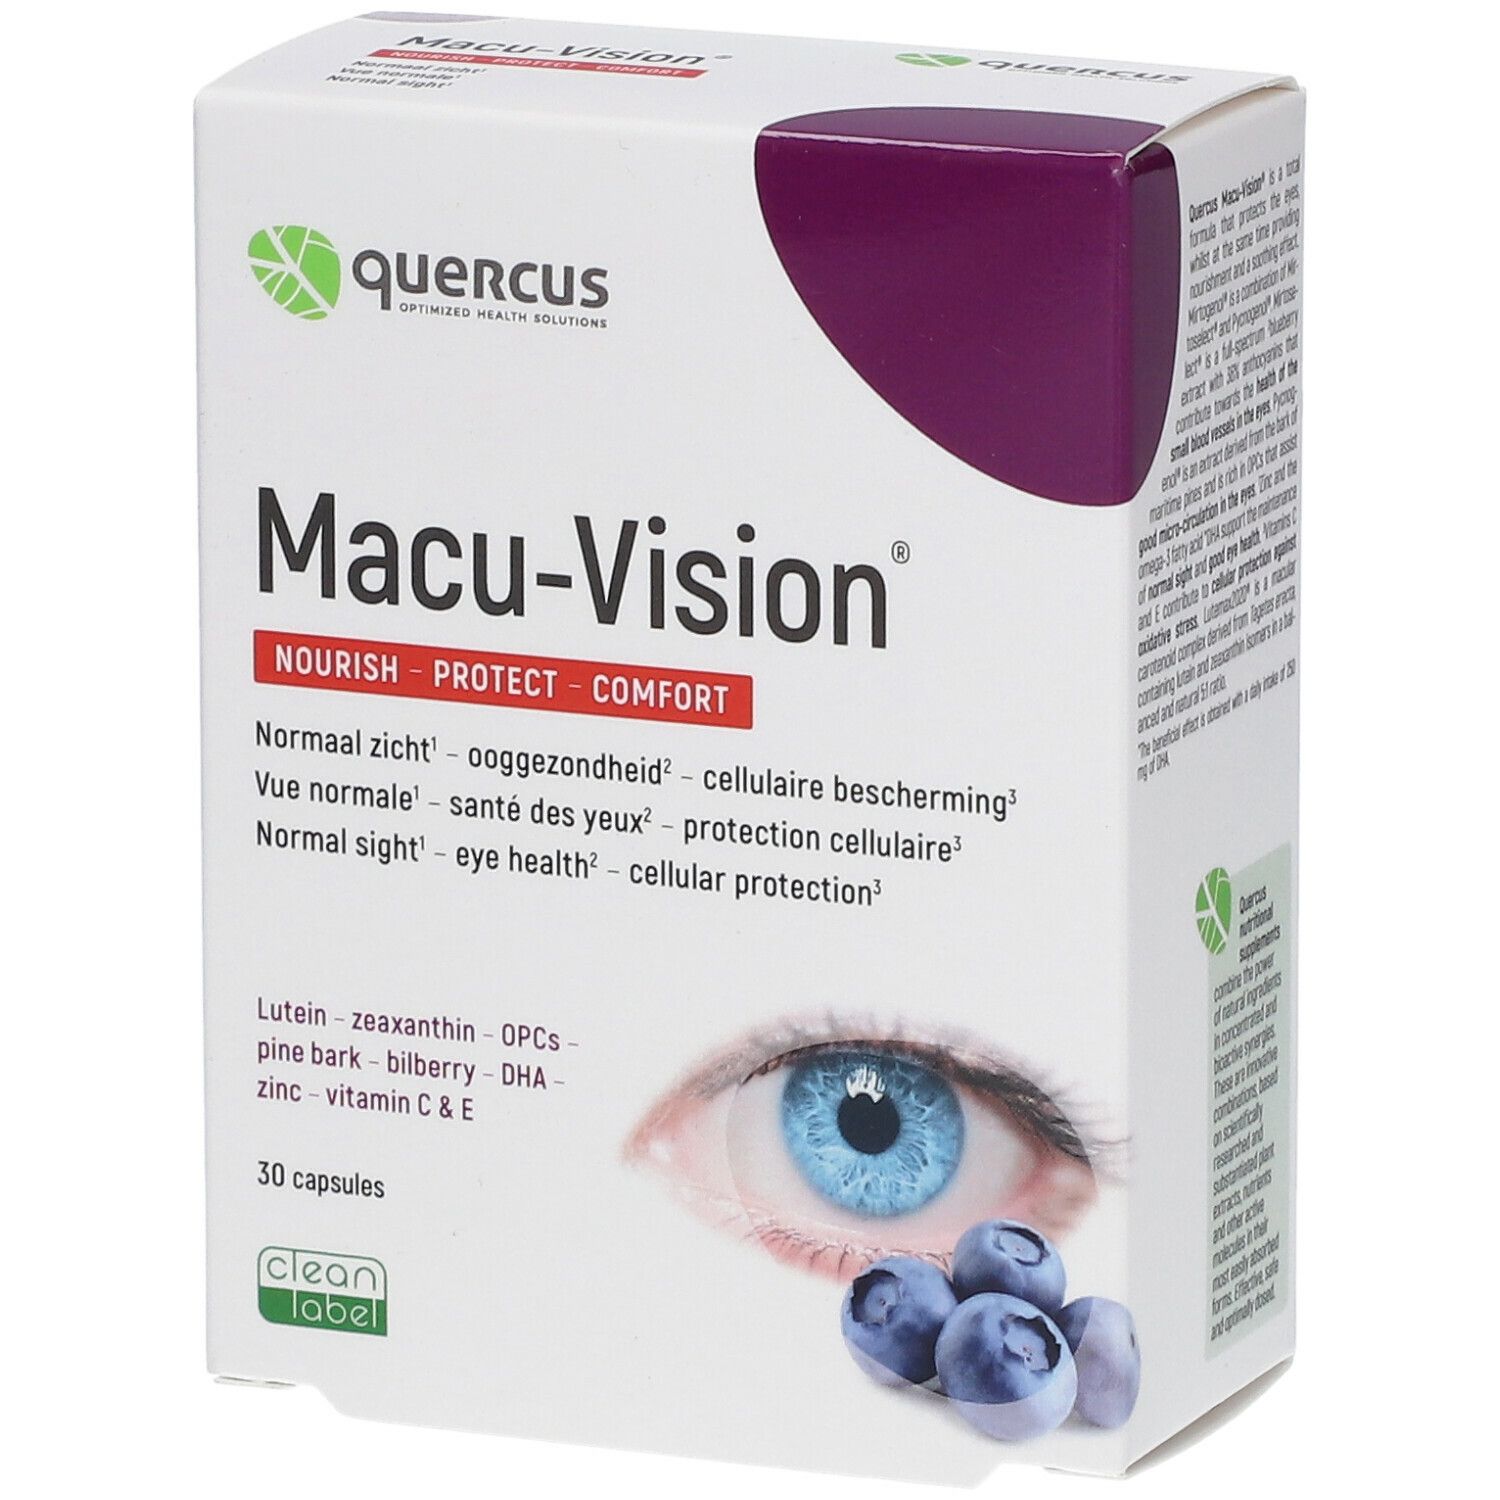 Quercus Macu-Vision® Nourish-Protect-Comfort